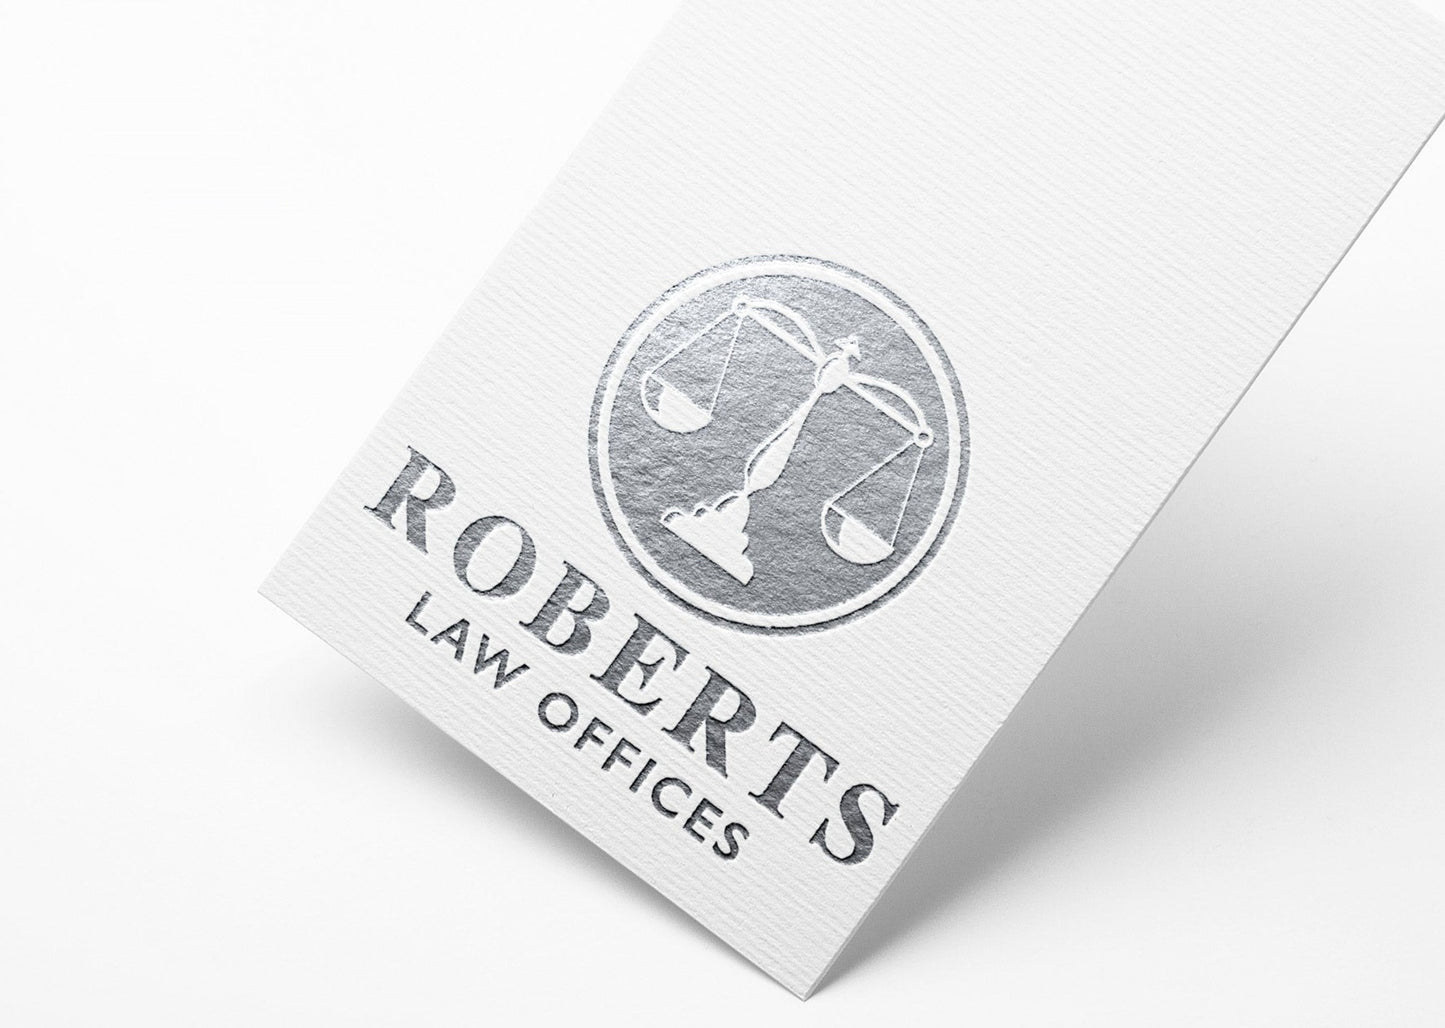 Law Firm Logo | Attorney Logo Design | Attorney at Law | Lawyer Logo | Law Offices Logo | Office Logo | Business Logo | Company Logo